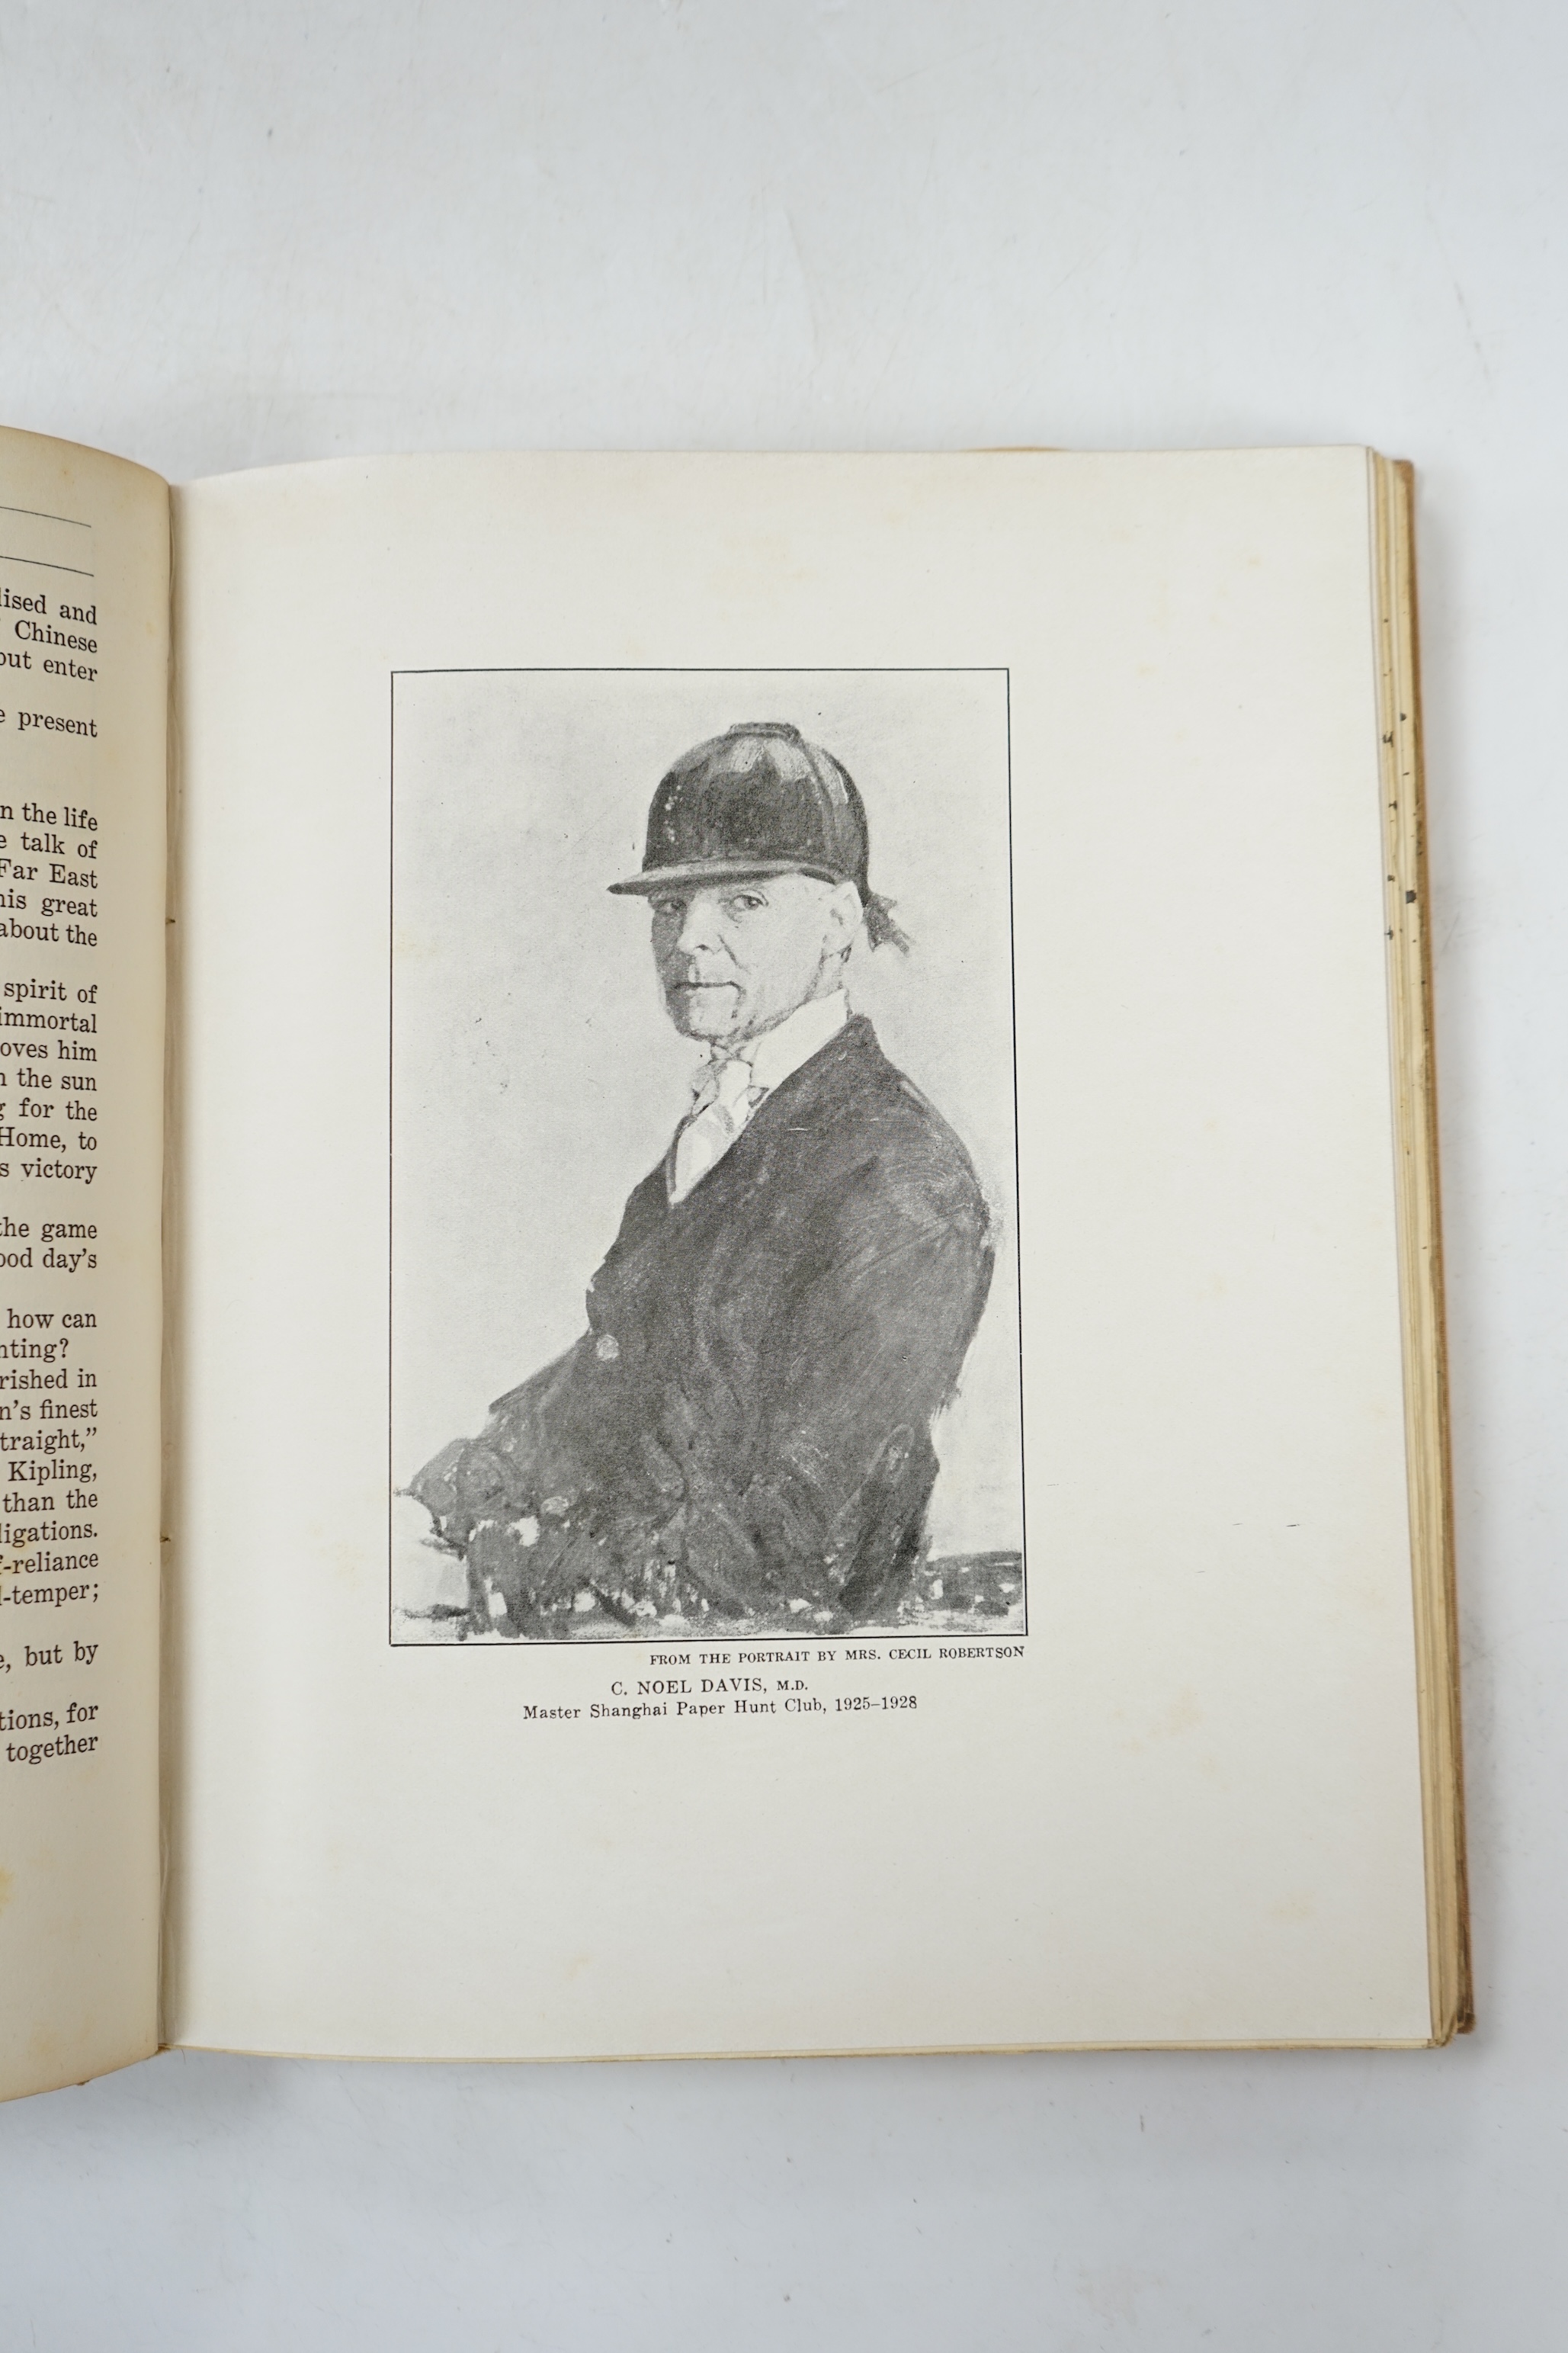 Noel Davis, Charles - A History of The Shanghai Paper Hunt Club, Shanghai: Kelly and Walsh, 1930